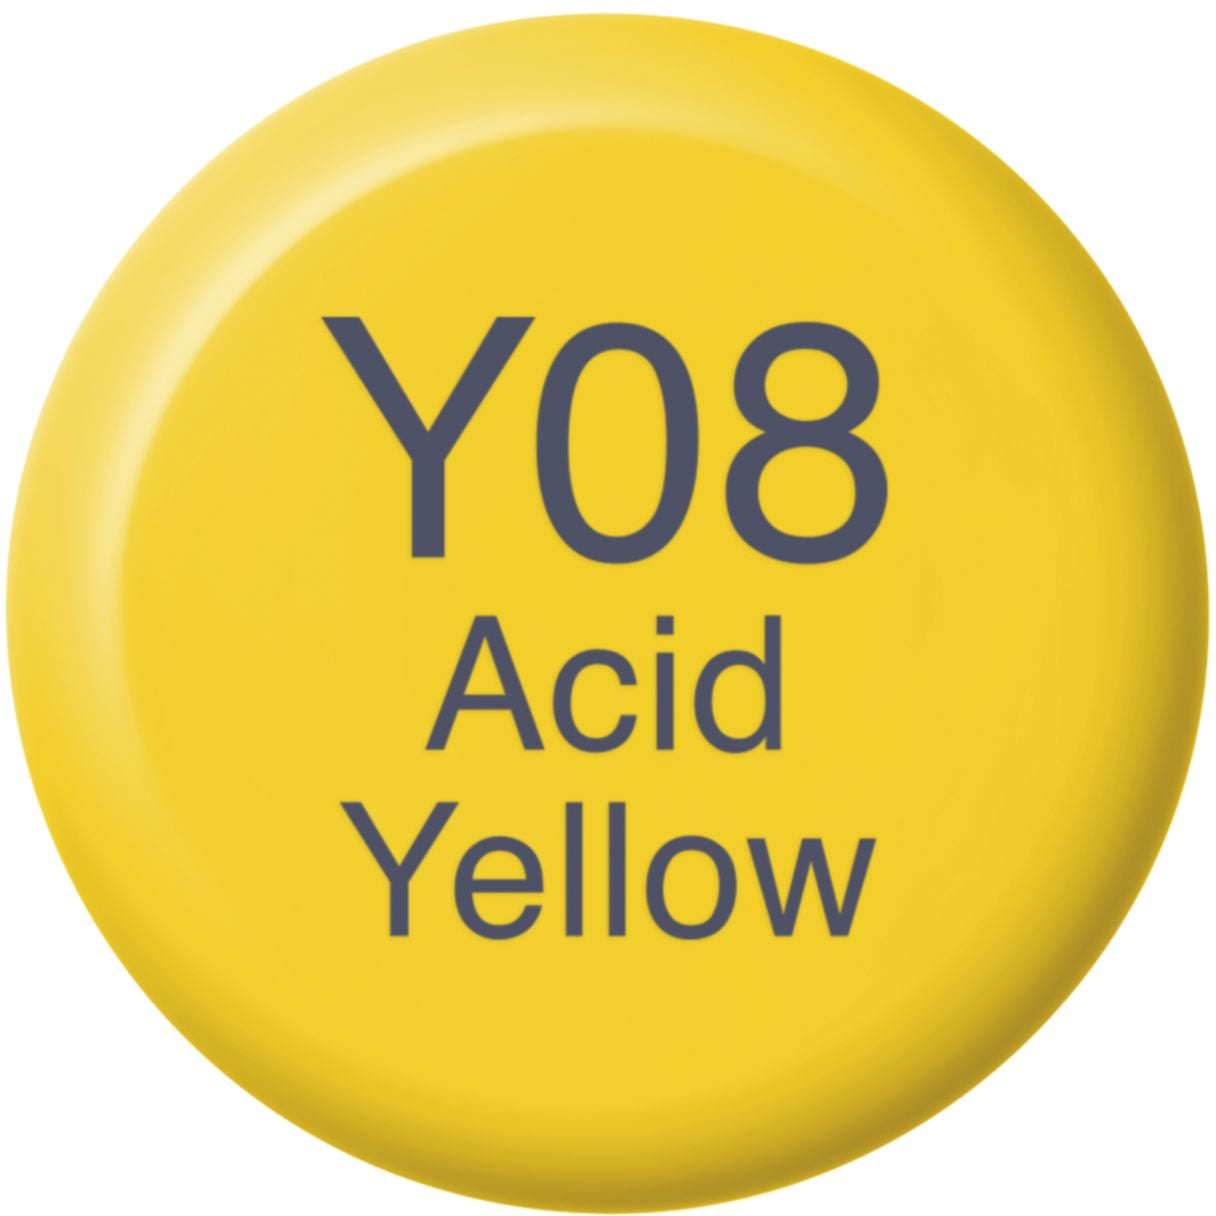 COPIC Ink Refill 21076192 Y08 - Acid Yellow